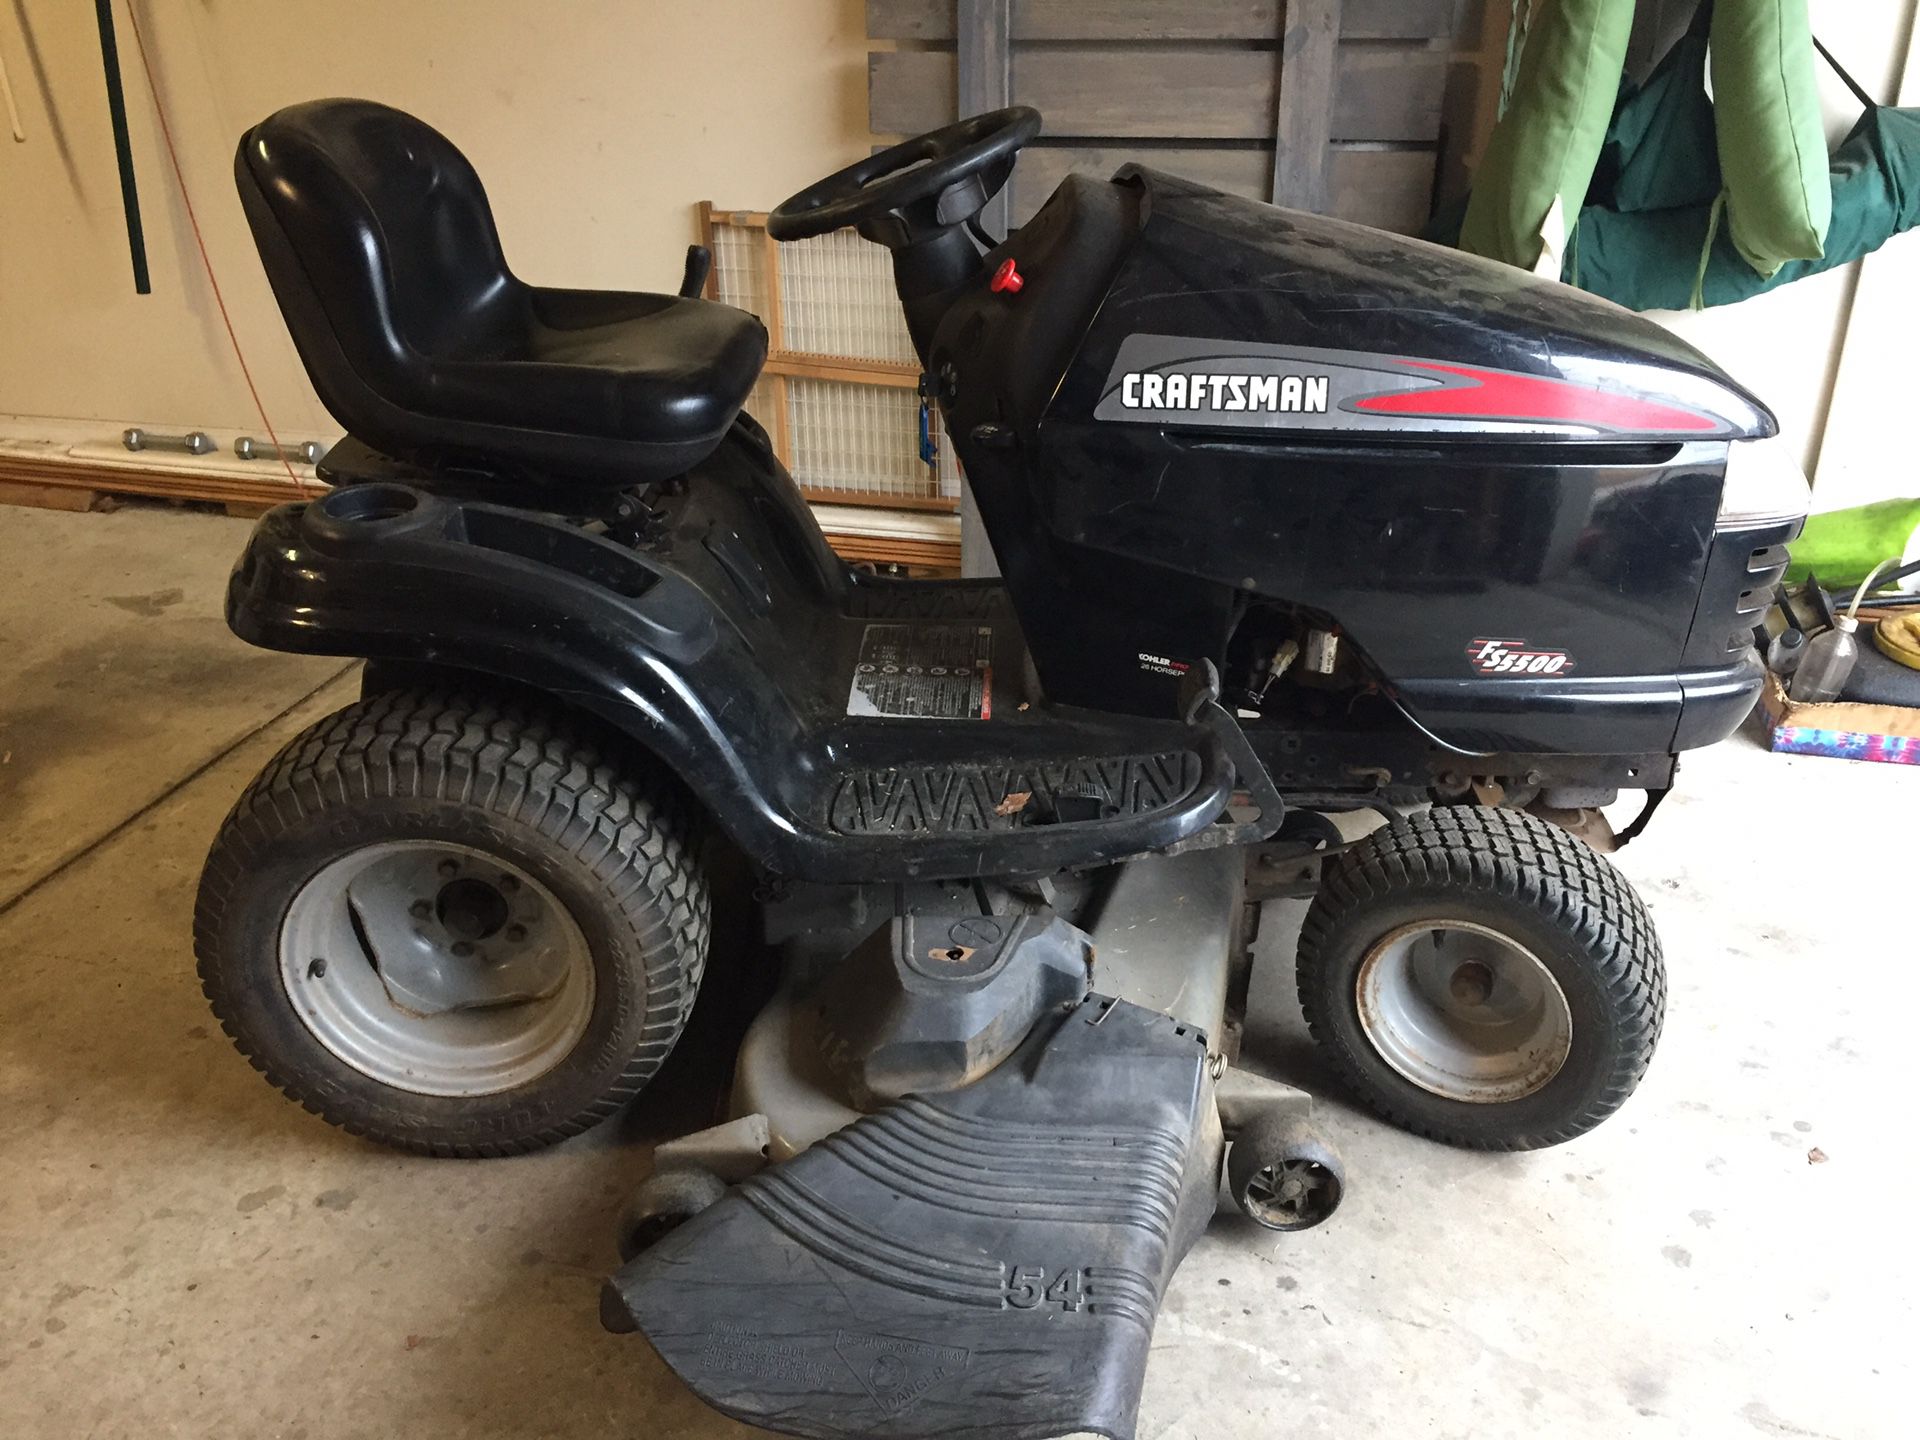 Craftsman FS5500 riding lawn mower